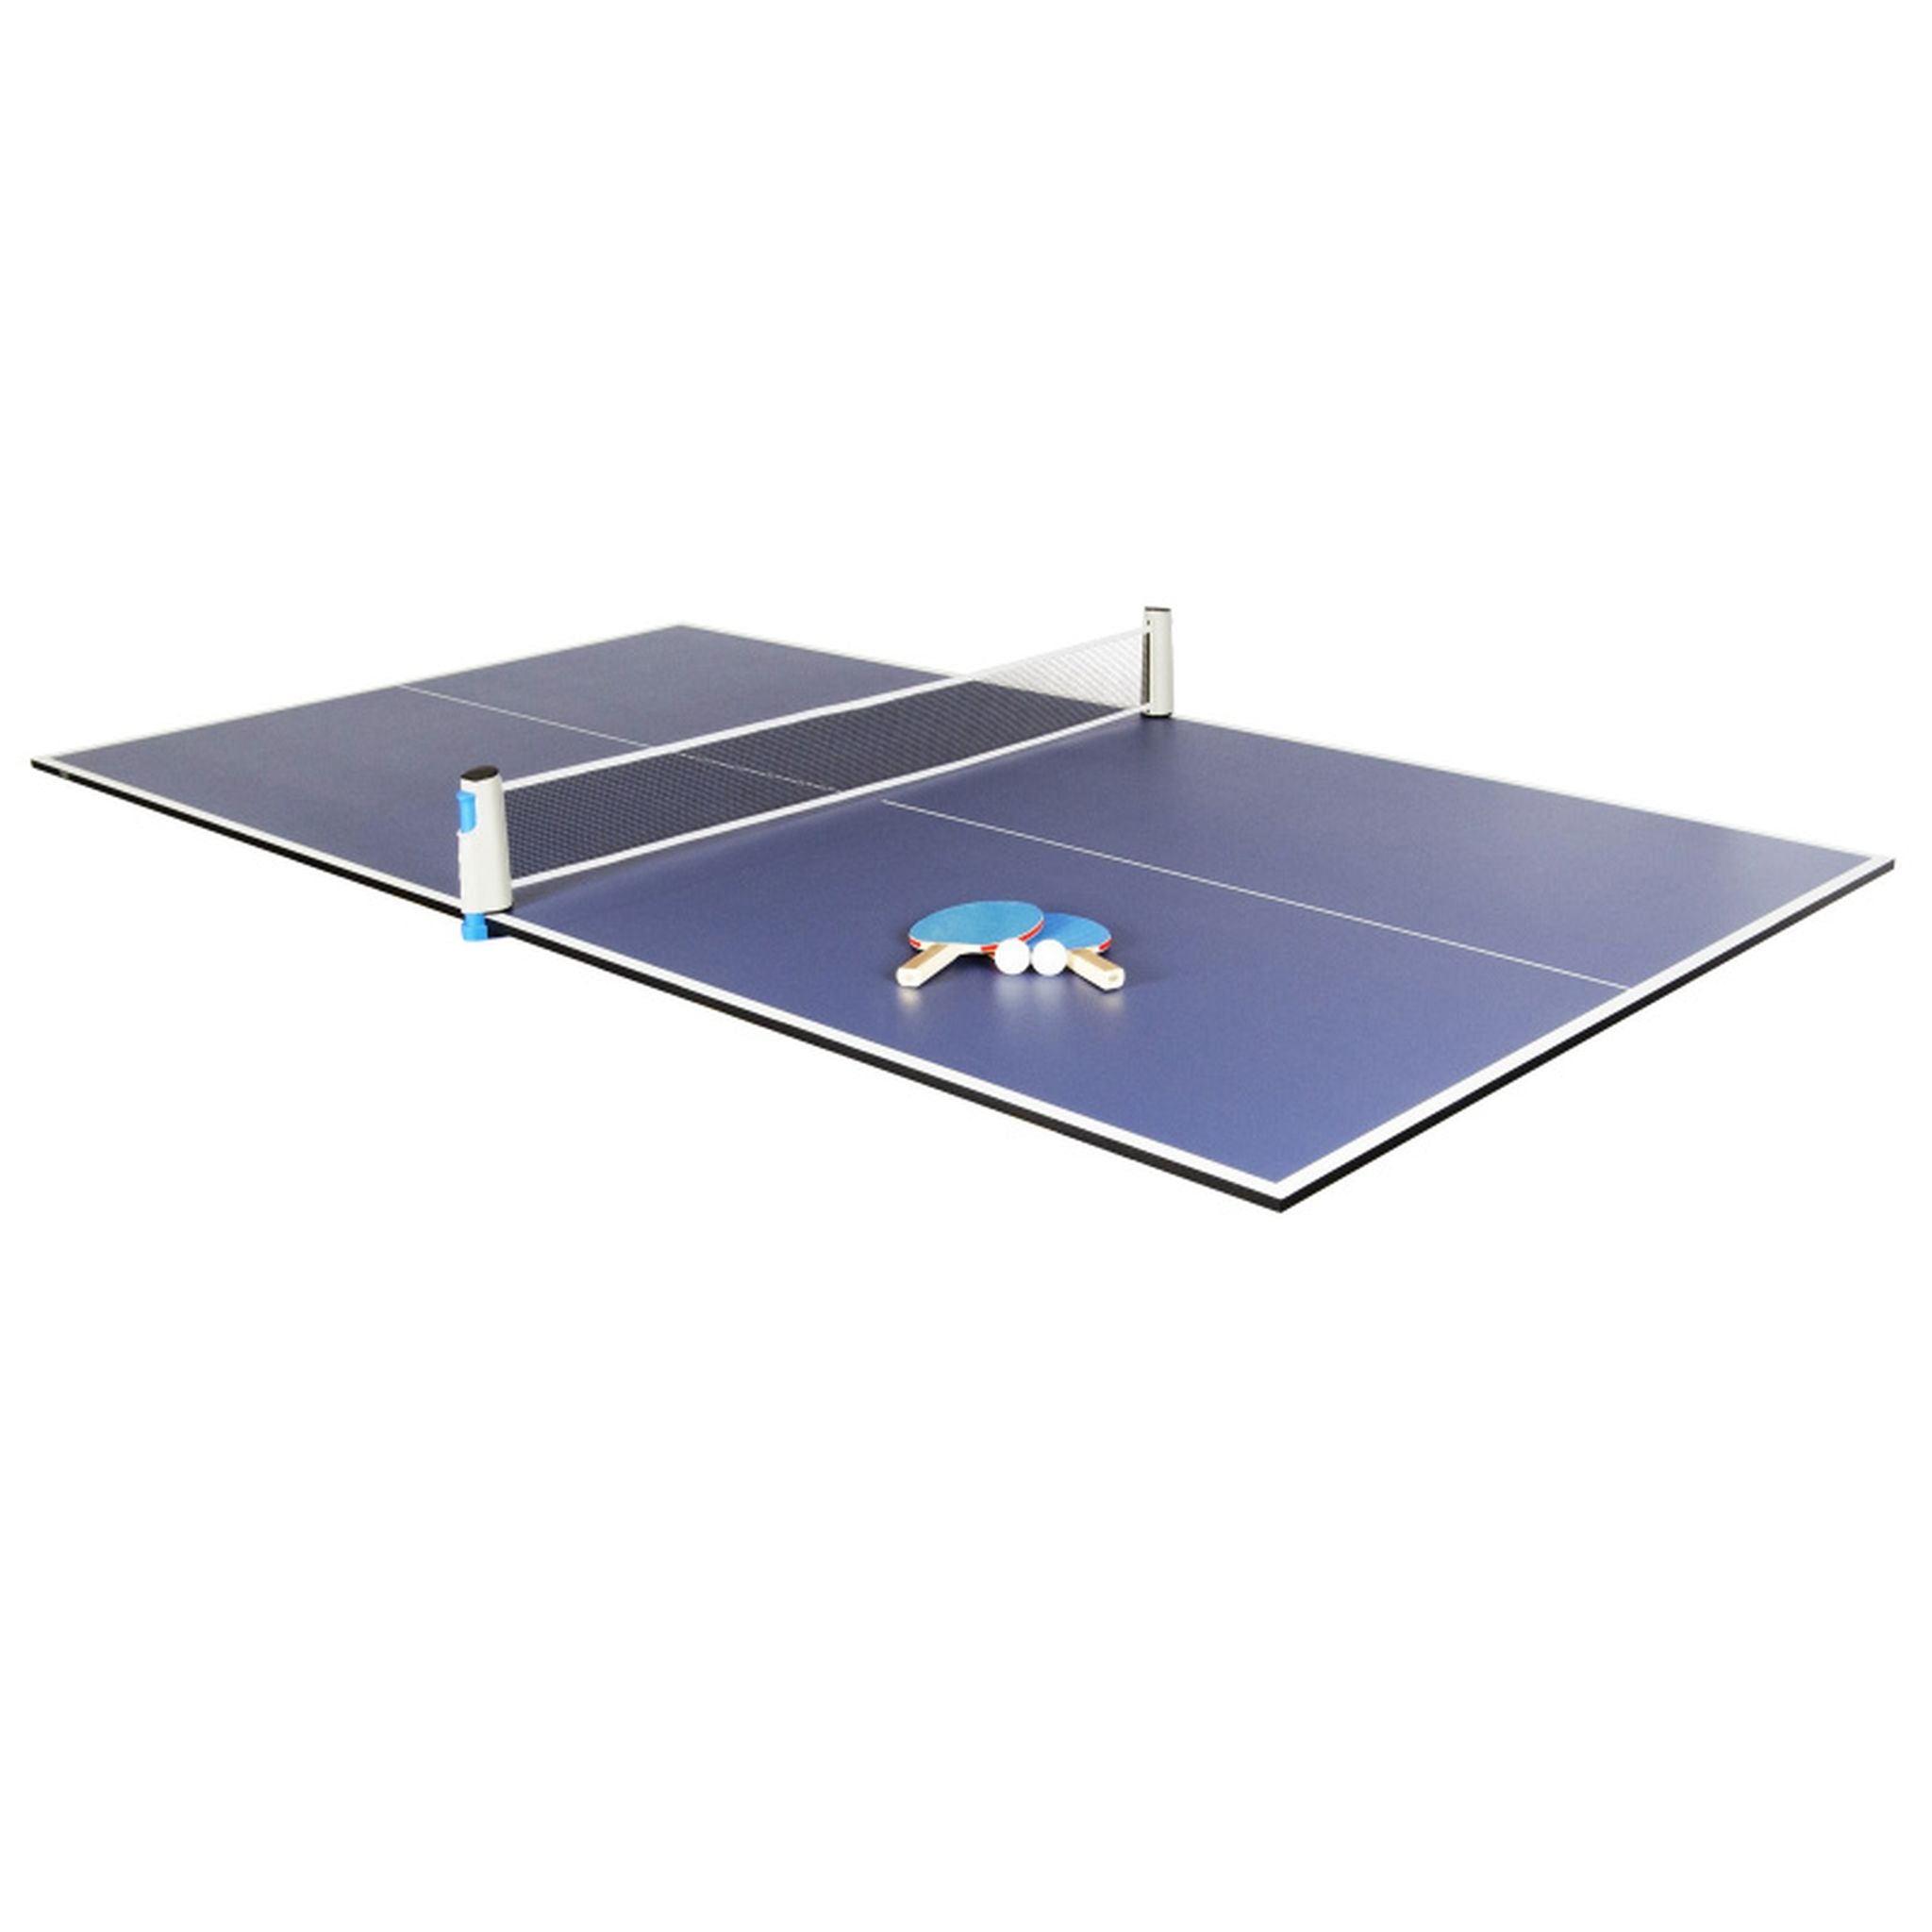 Smartplay 18mm Conversion Table Tennis Top